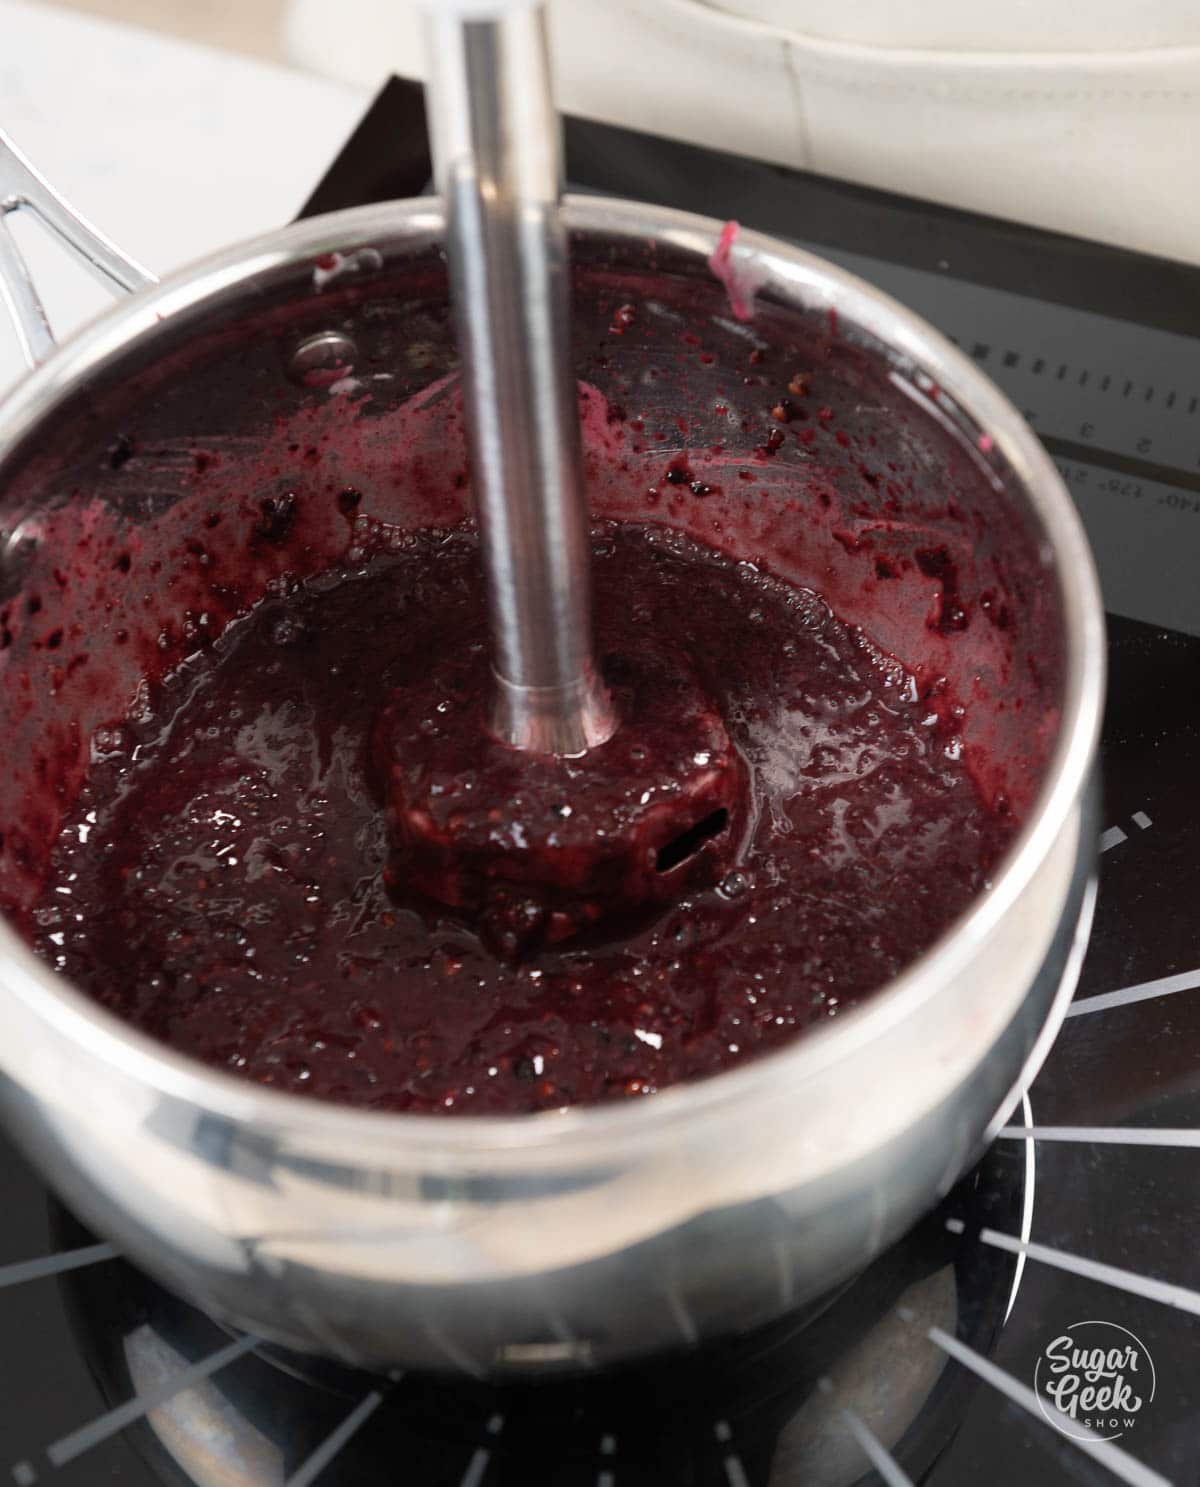 immersion blender blending frozen blackberries in a saucepan